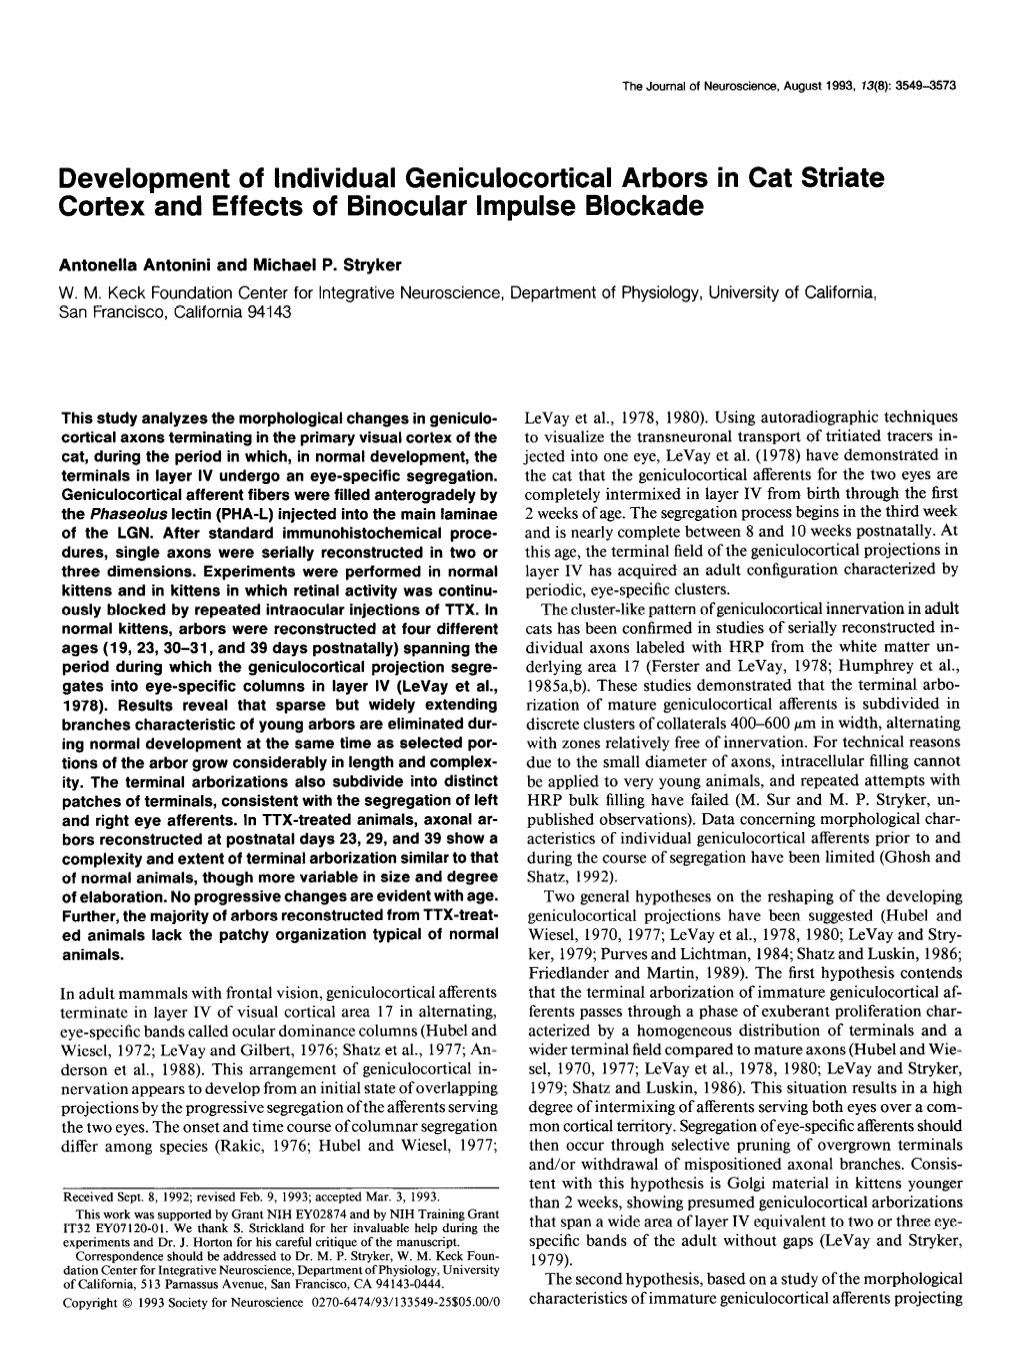 Development of Individual Geniculocortical Arbors in Cat Striate Cortex and Effects of Binocular Impulse Blockade